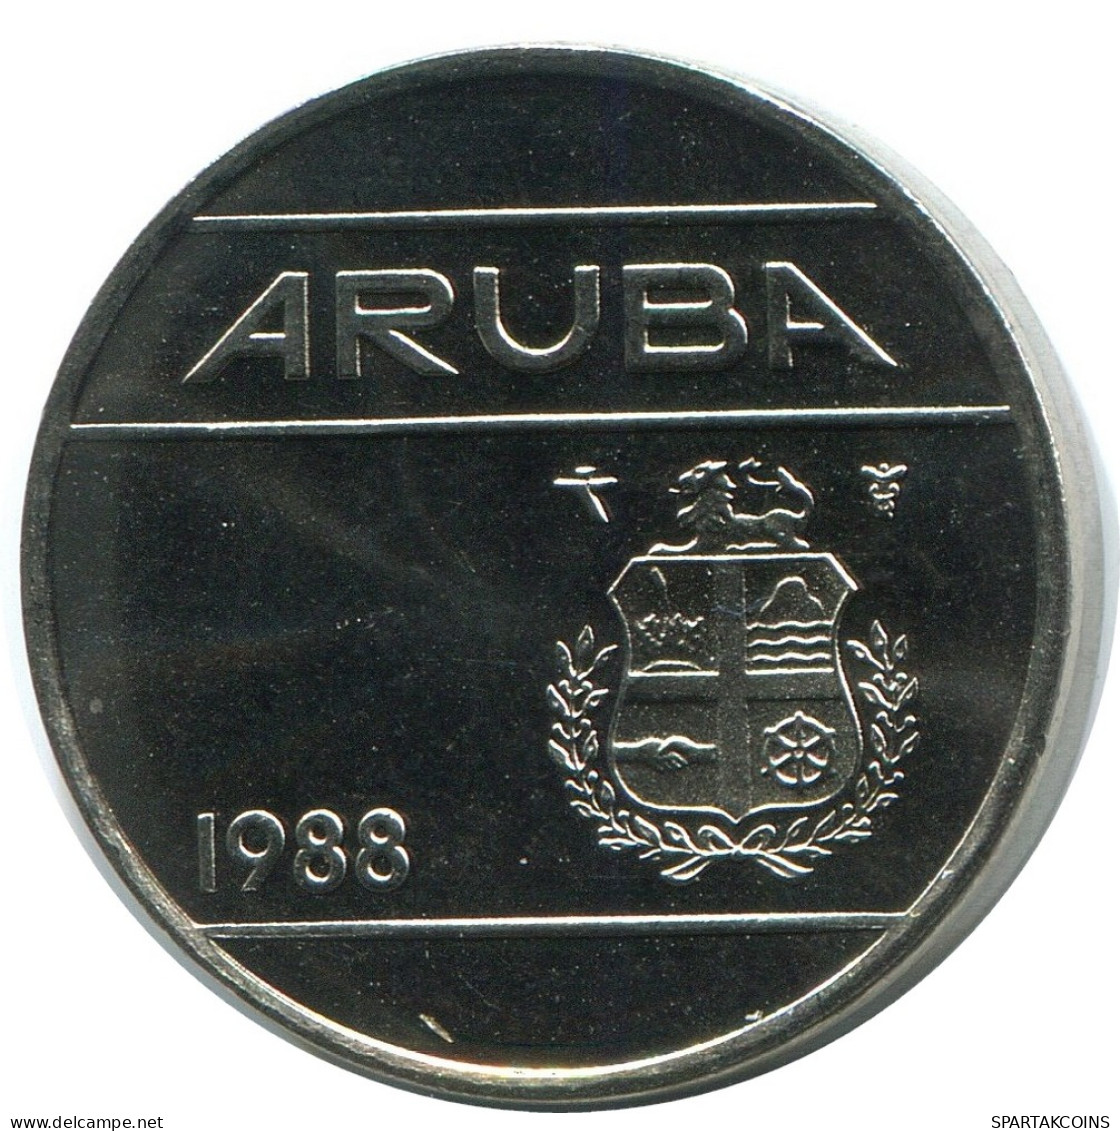 25 CENTS 1988 ARUBA Coin (From BU Mint Set) #AH069.U - Aruba